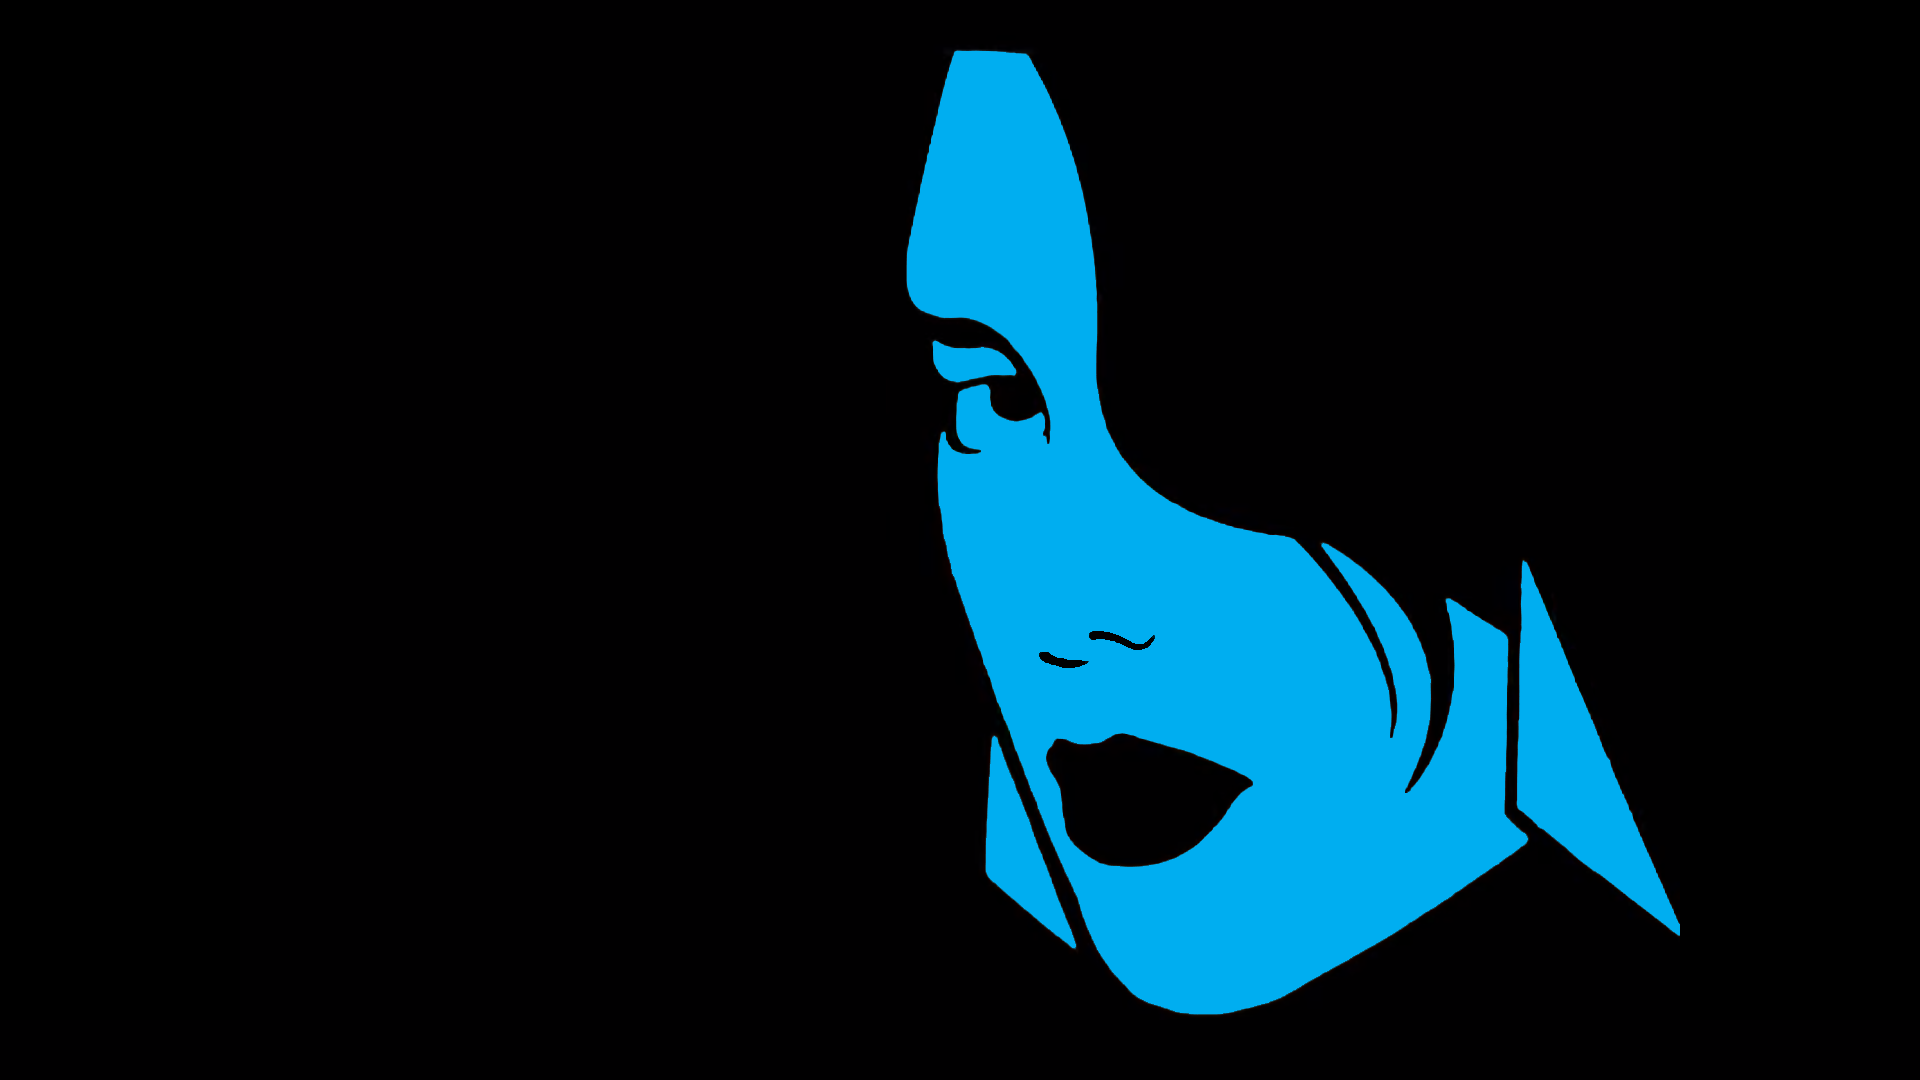 Grand Theft Auto Vice City Minimalism Simple Background Blue Face Illustration Women Rockstar Games  1920x1080